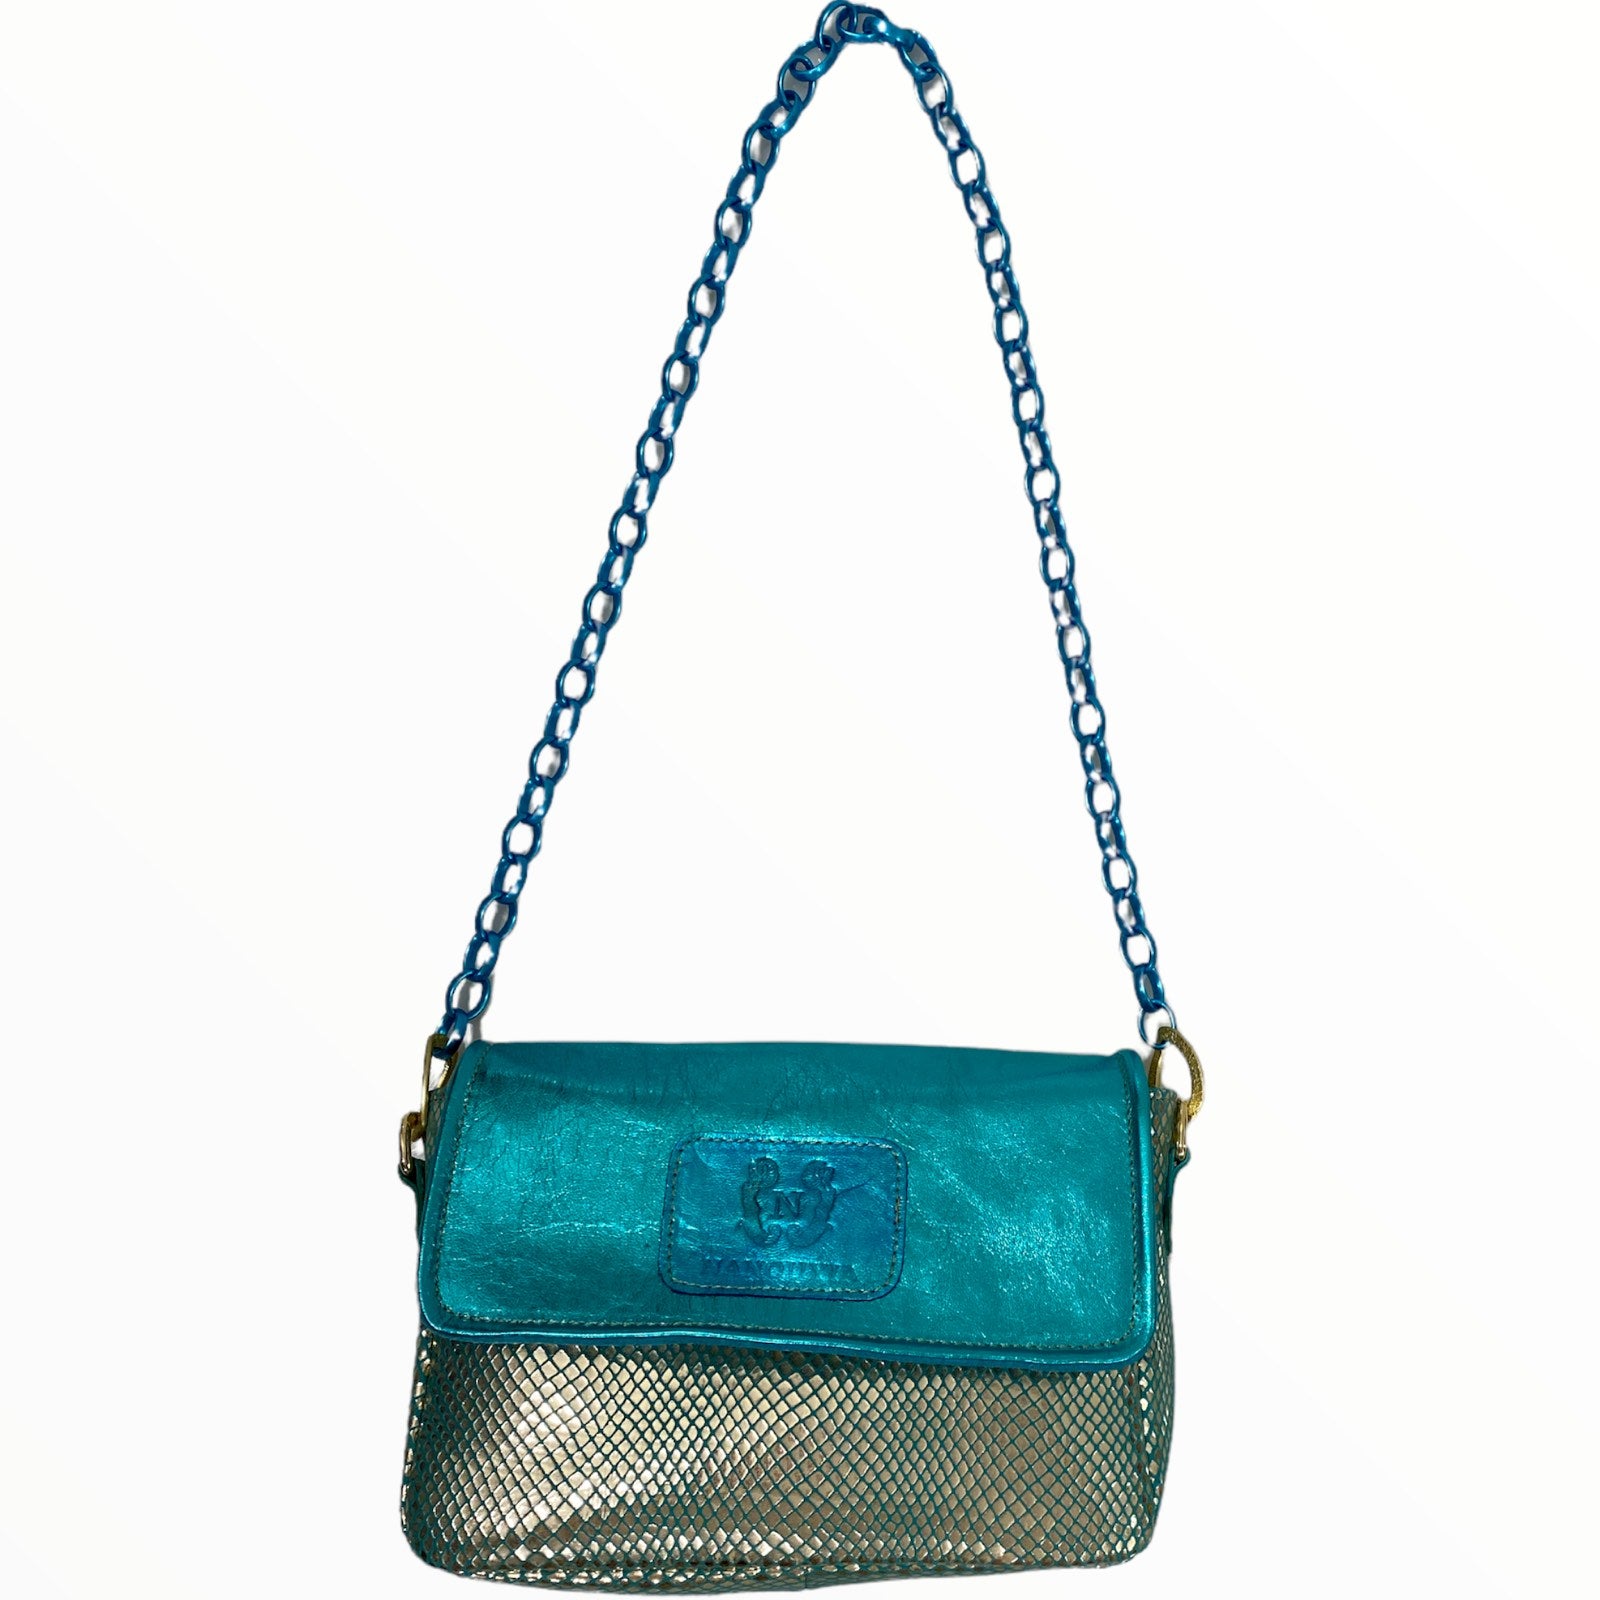 Mandy mini. Tiffany metallic-mermaid leather limited edition bag